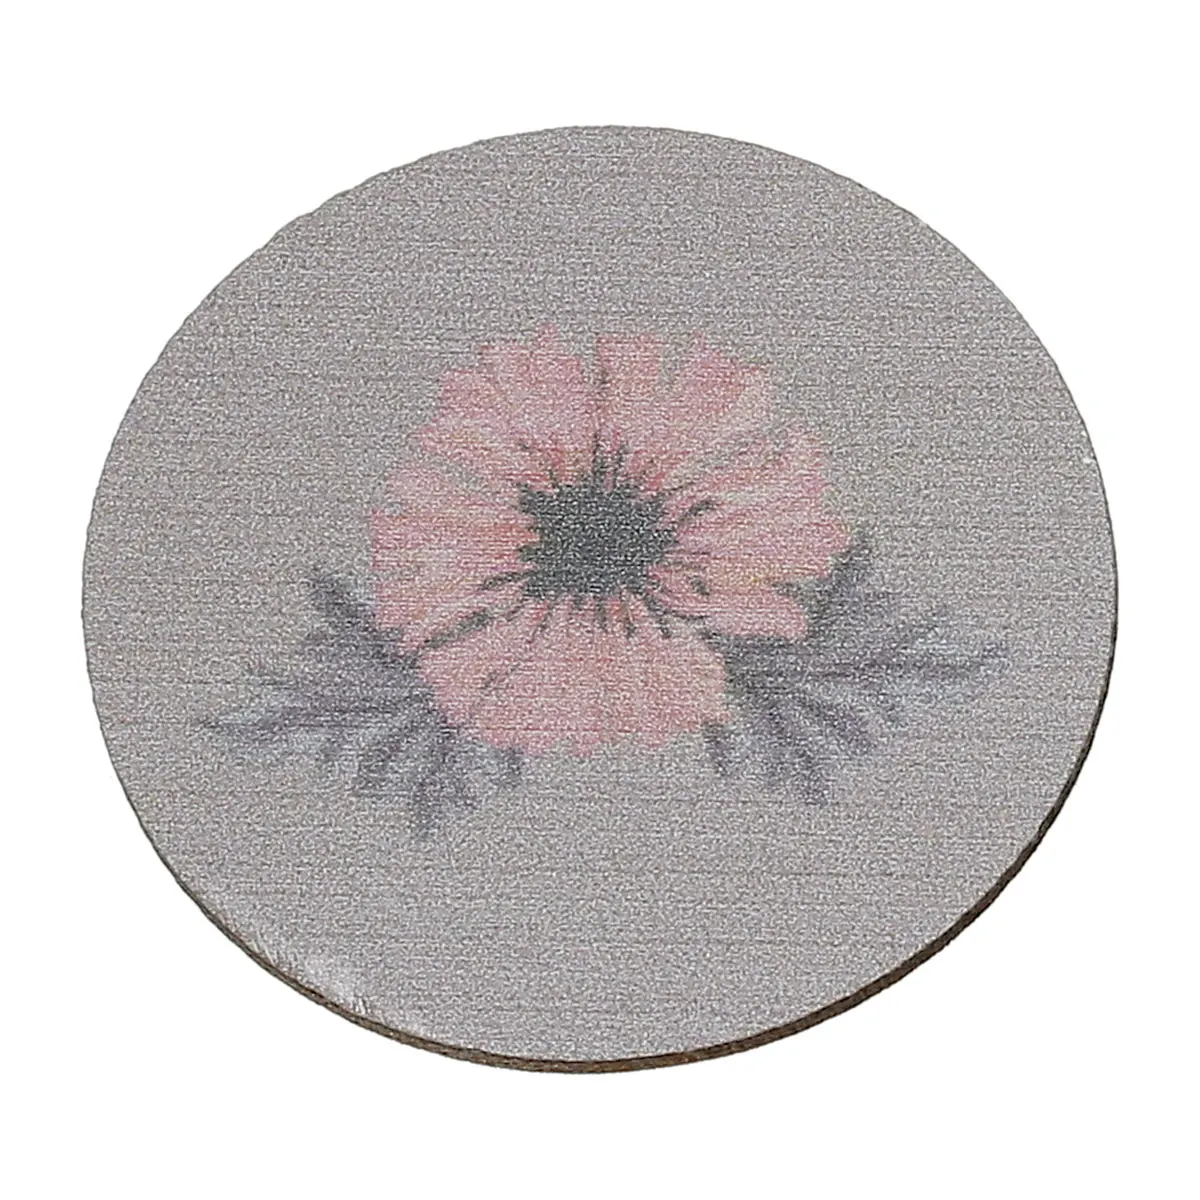 DoreenBeads Wood Cabochons Scrapbooking Embellishments Findings Oval Gray Flower Pattern 32mm(1 2/8")x 30mm(1 1/8") 4 PCs |